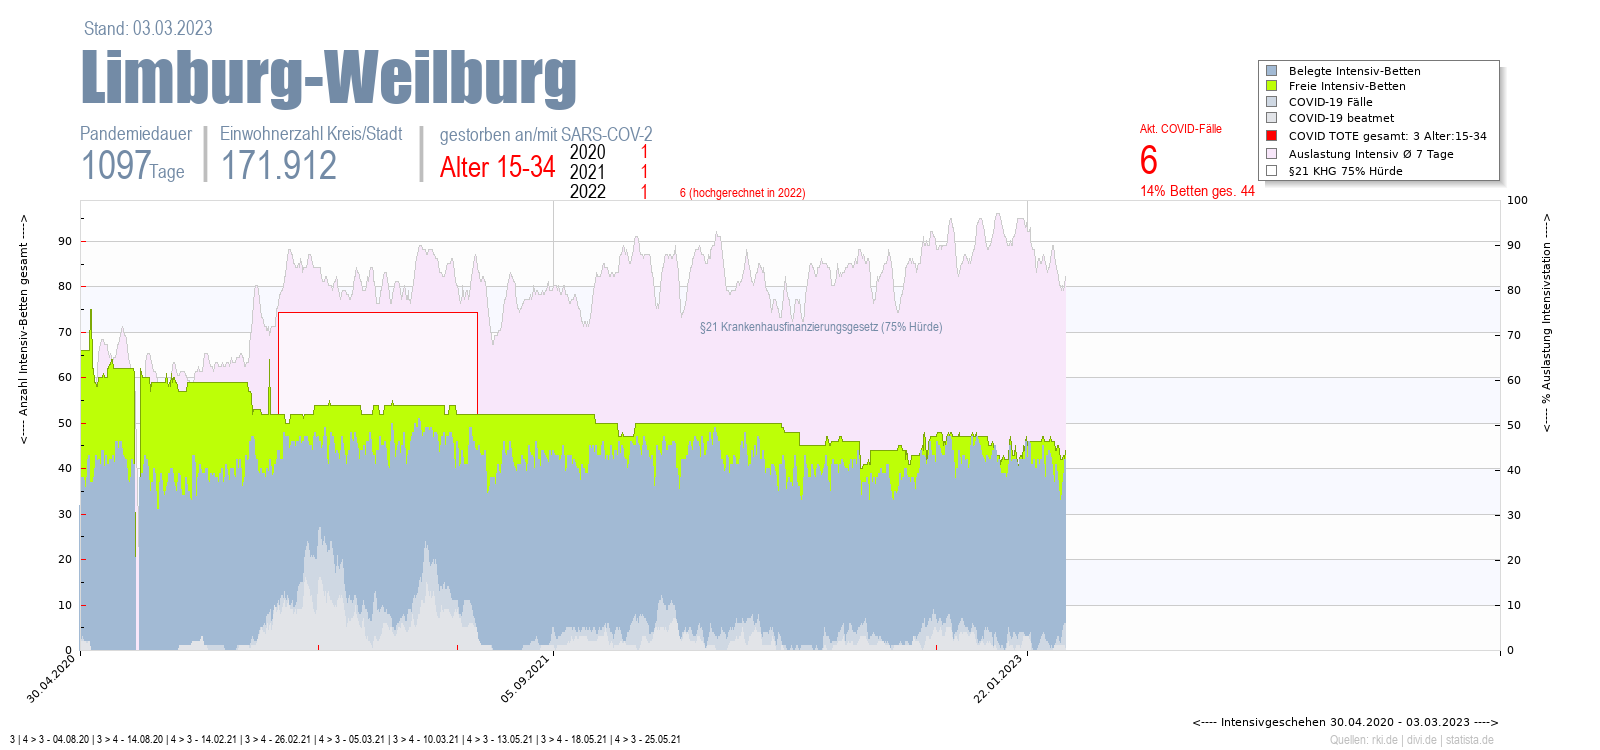 Intensivstation Auslastung Limburg-Weilburg Alter 0-4